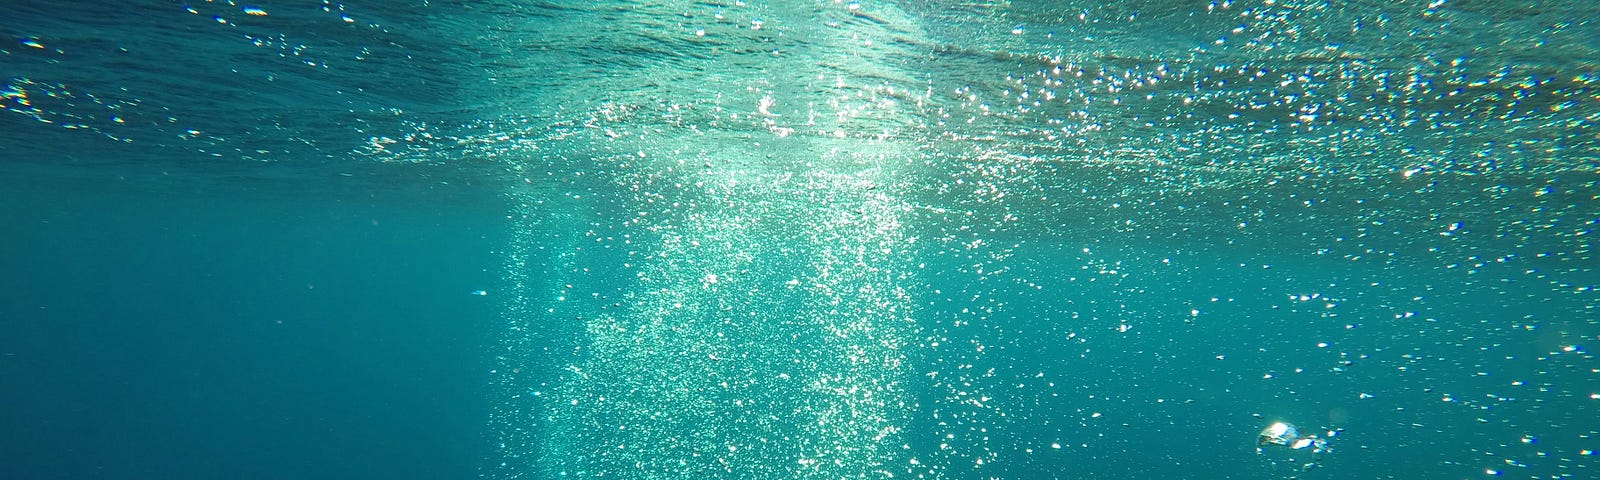 Photo under the ocean